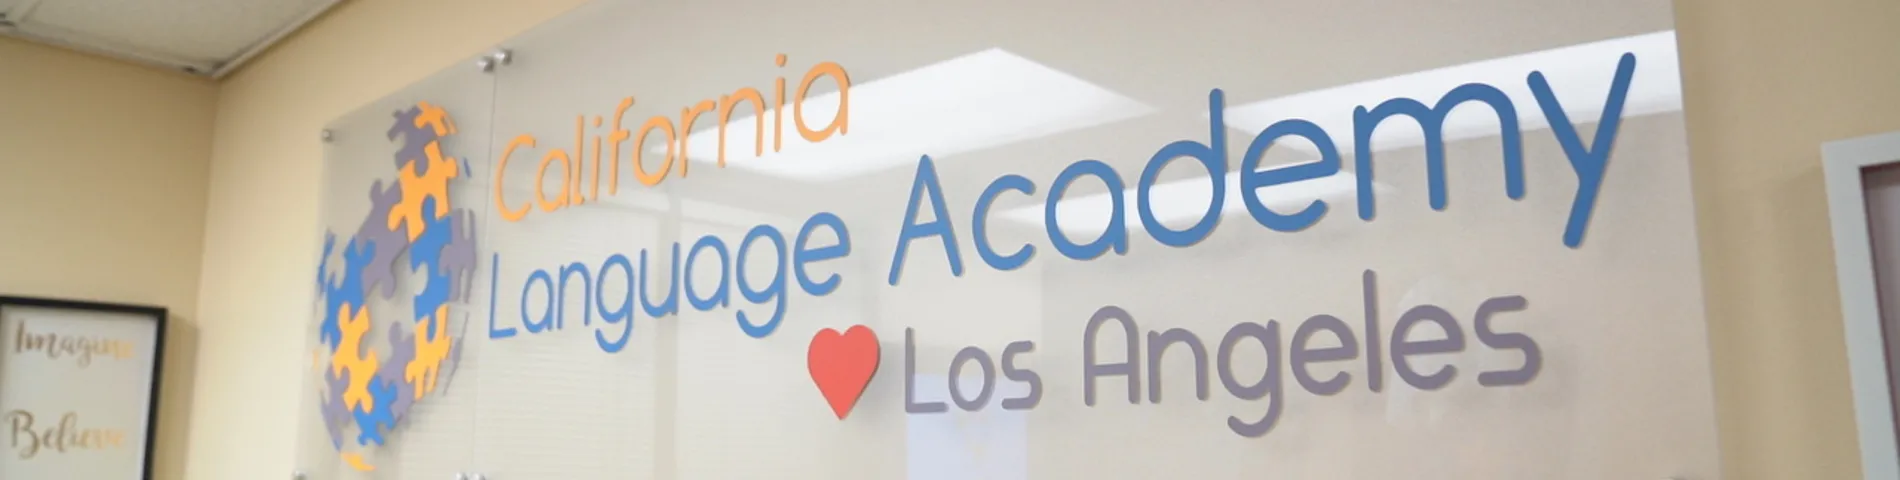 California Language Academy picture 1